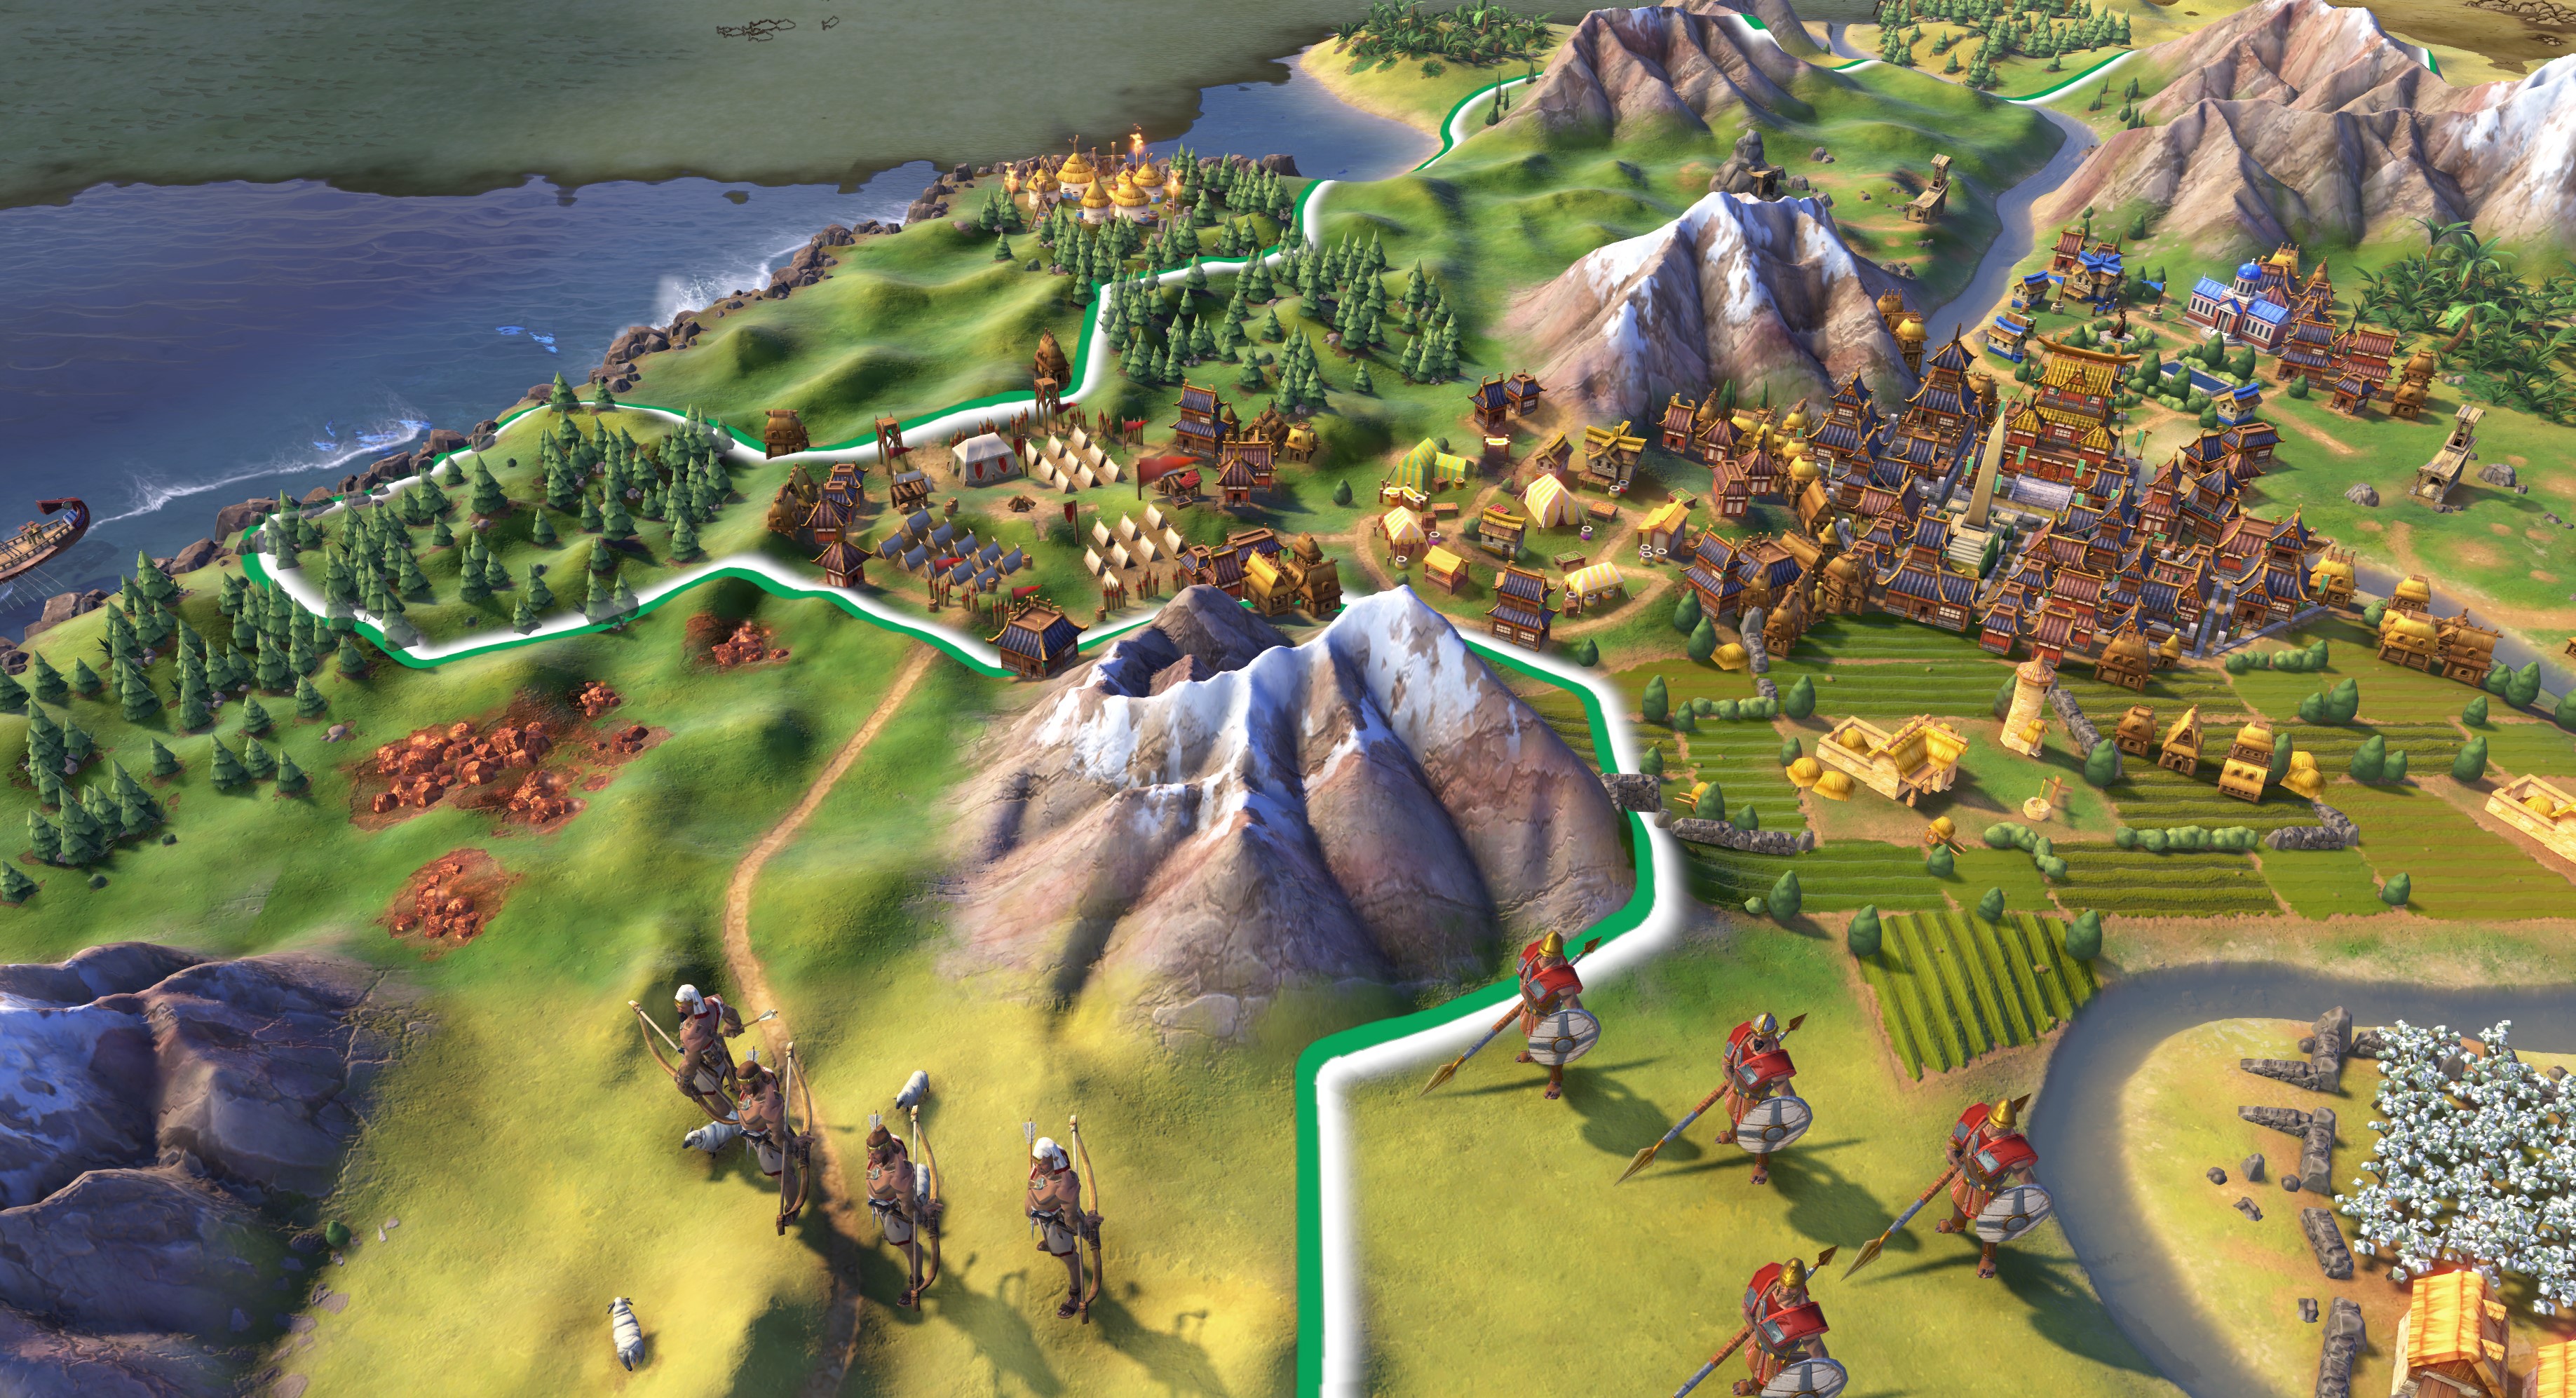 A battle underway next to a growing city in Sid Meierâ€™s Civilization VI